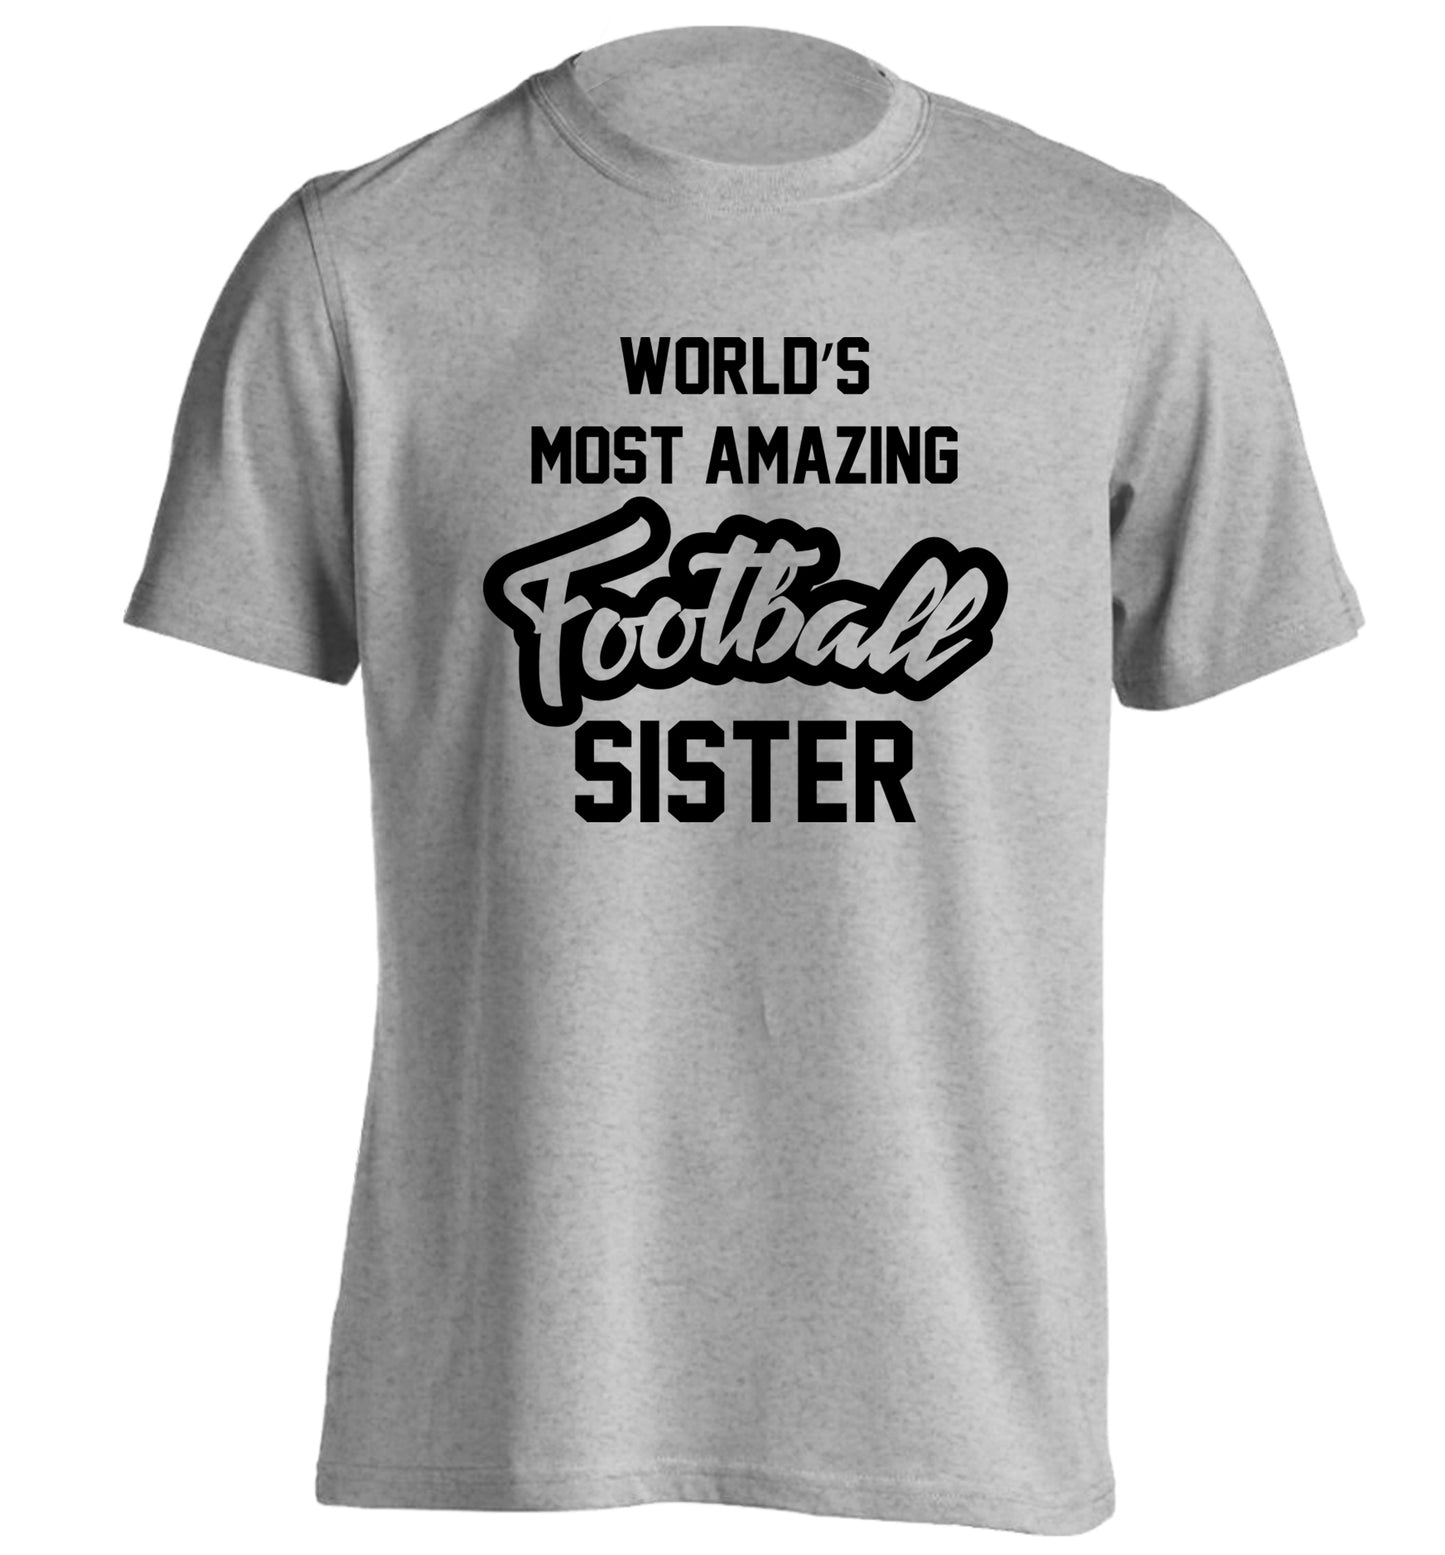 Worlds most amazing football sister adults unisexgrey Tshirt 2XL